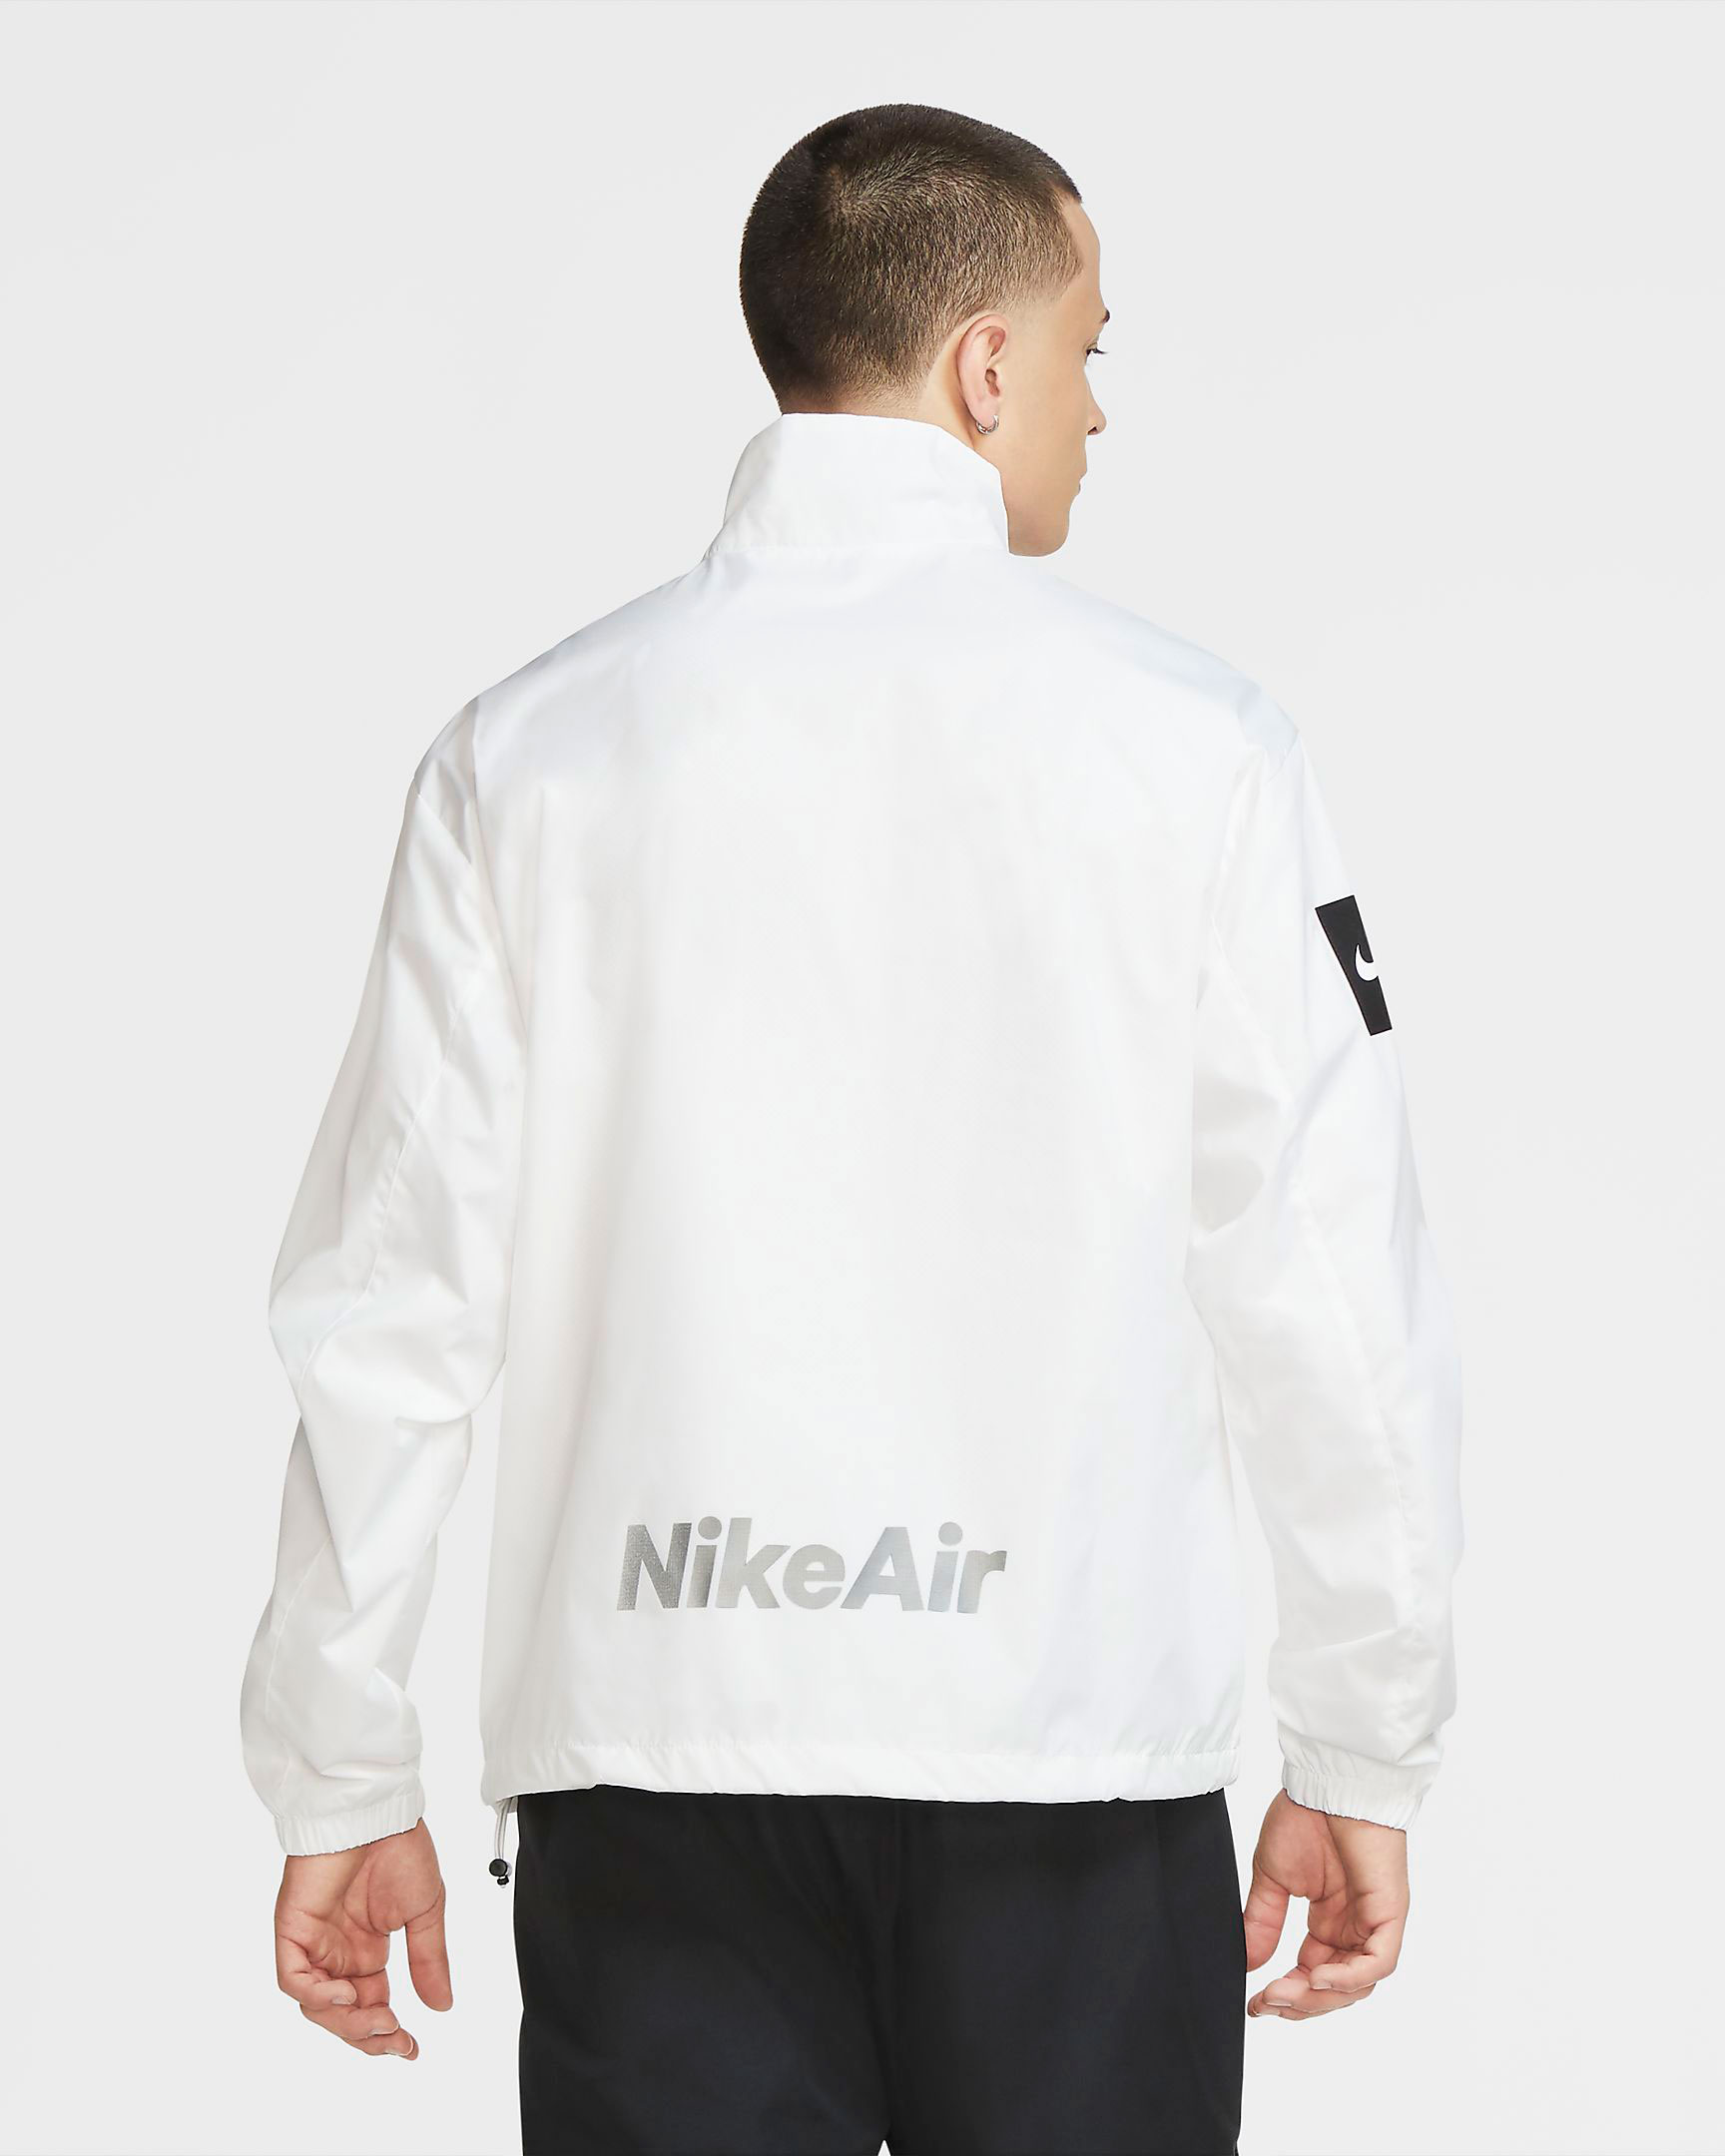 nike-air-utility-reflective-jacket-white-black-2